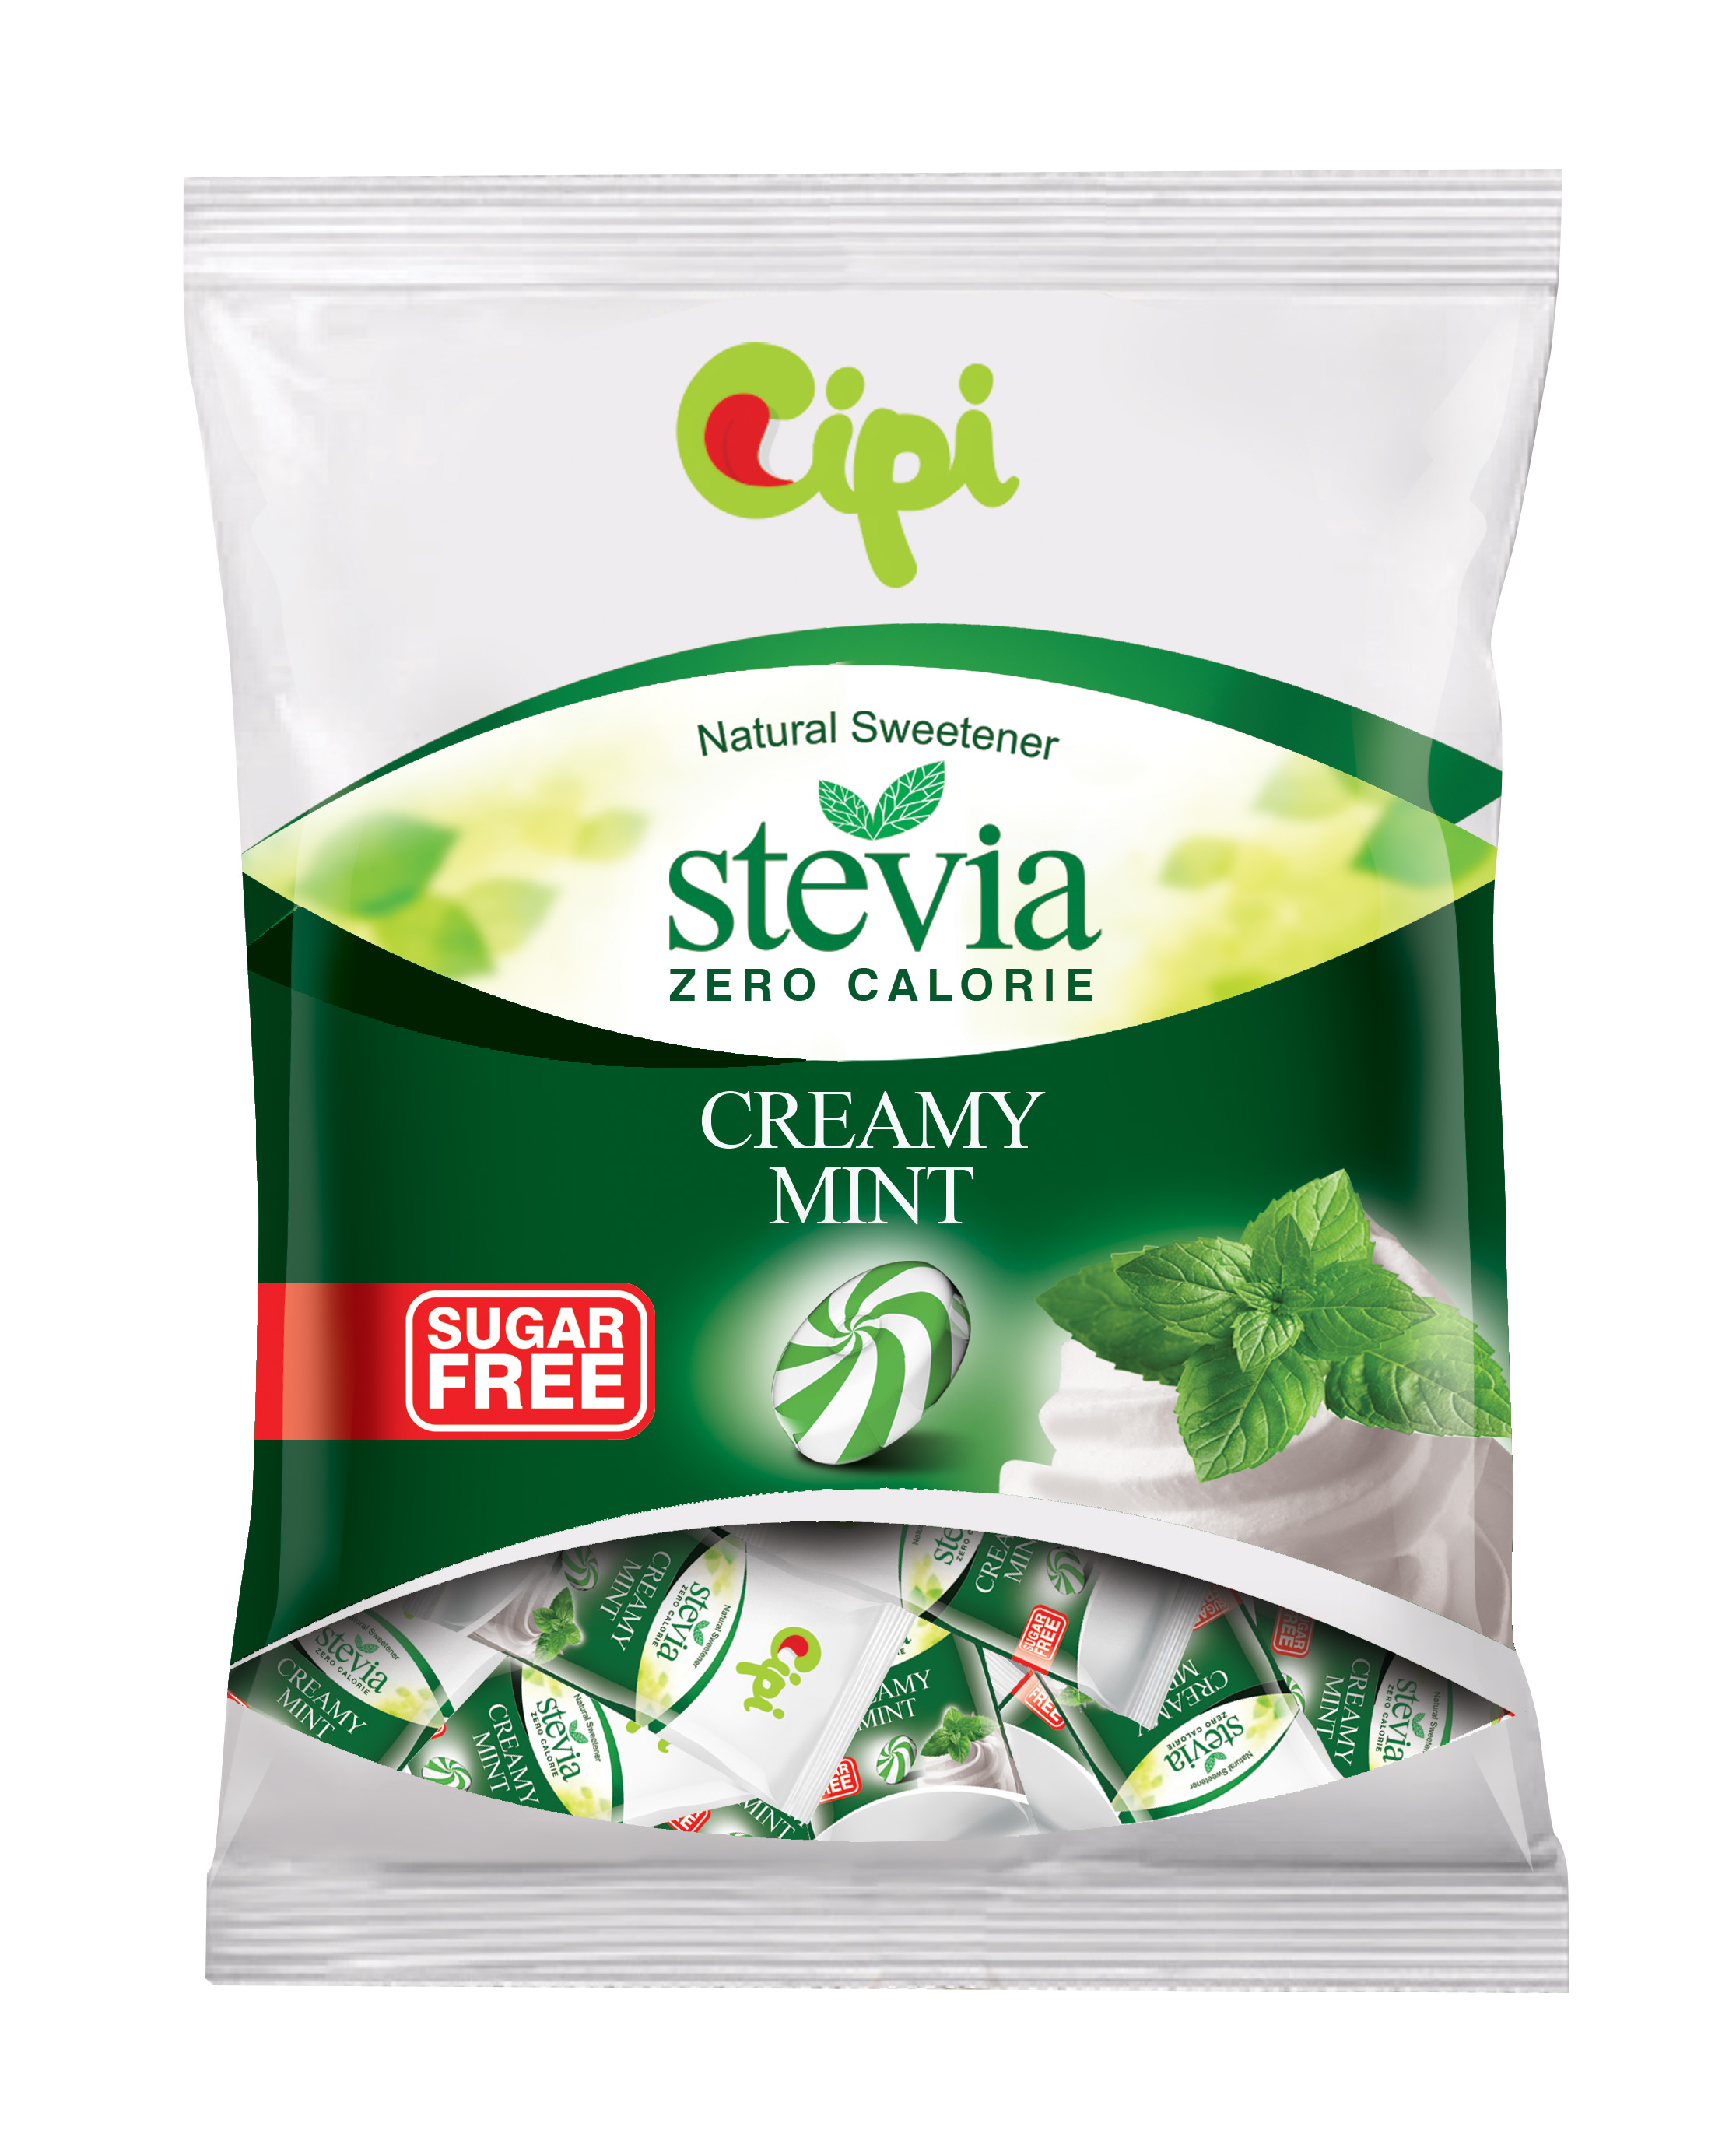 Stevia creamy mint